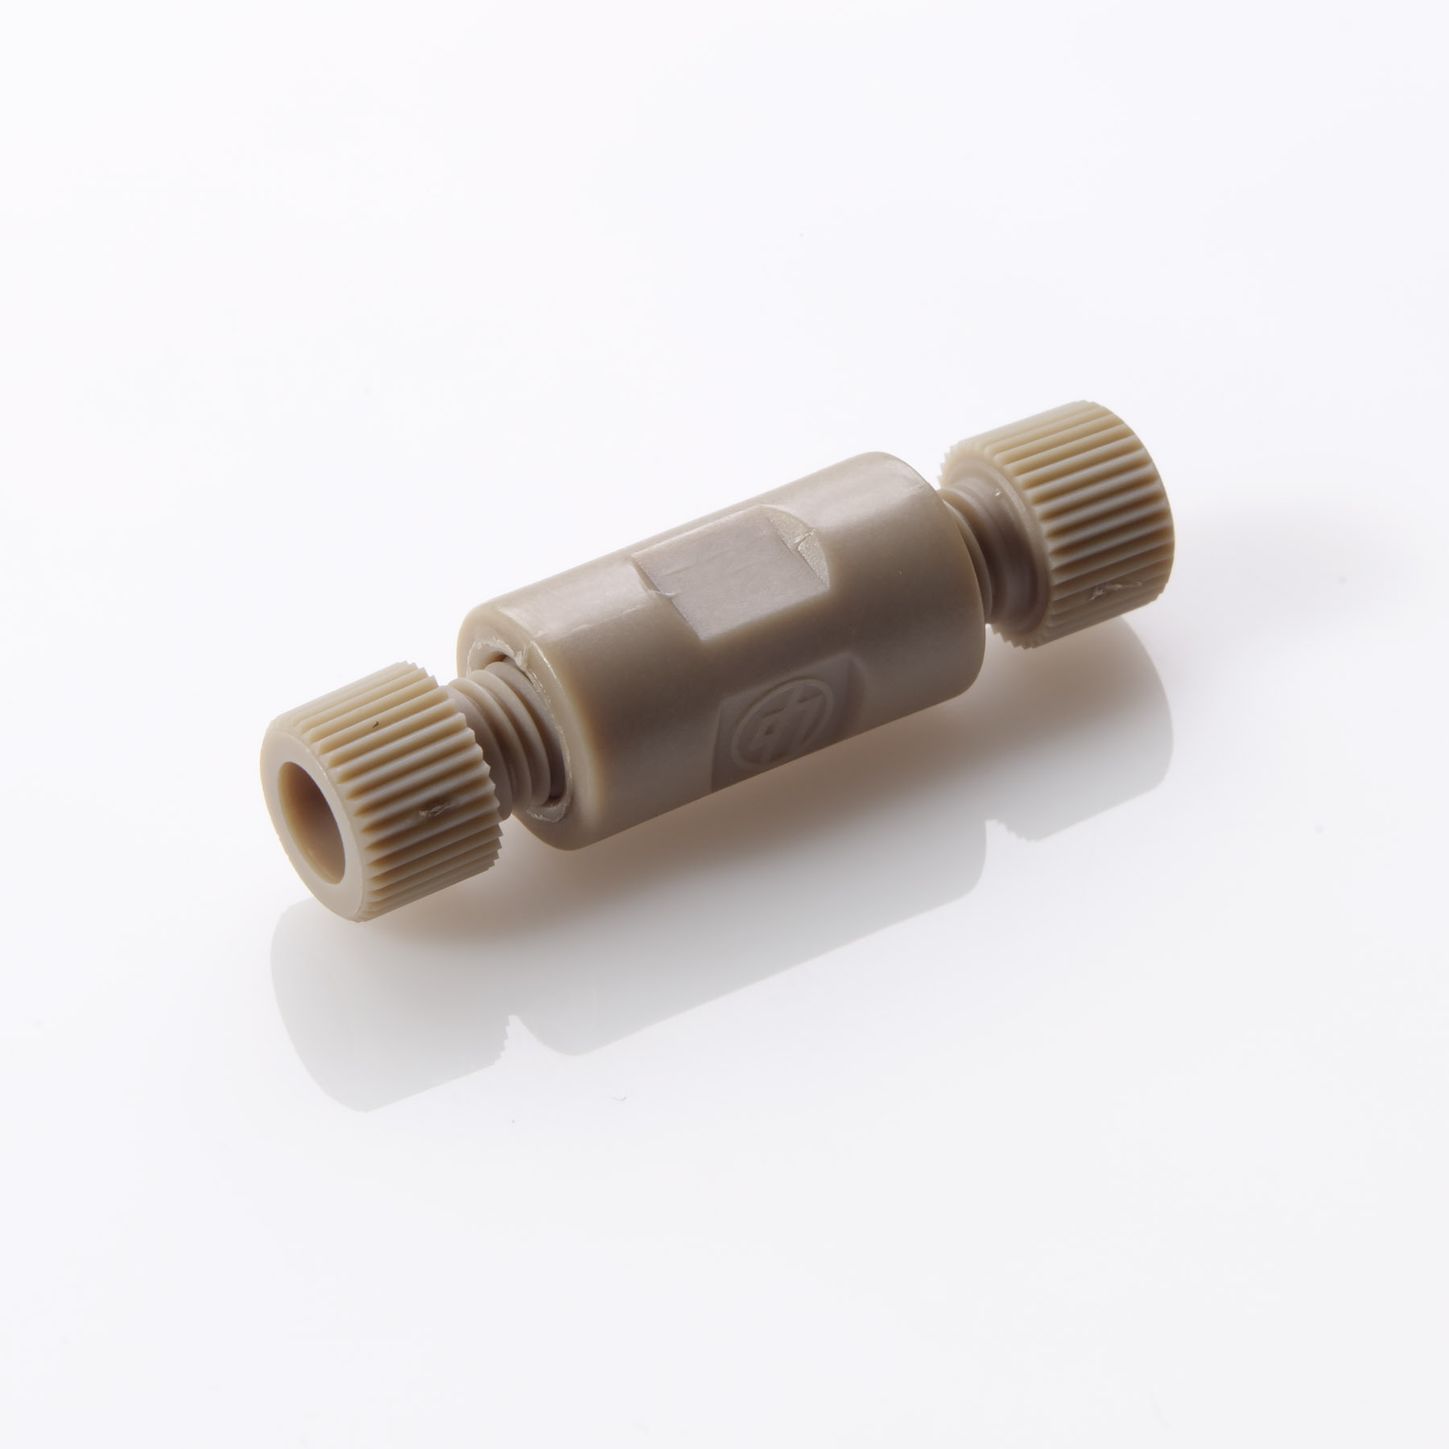 Connector Union PEEK™ 0.020 (0.50mm) Thru-Hole for 1/16" OD Tubing (Union + Fittings)